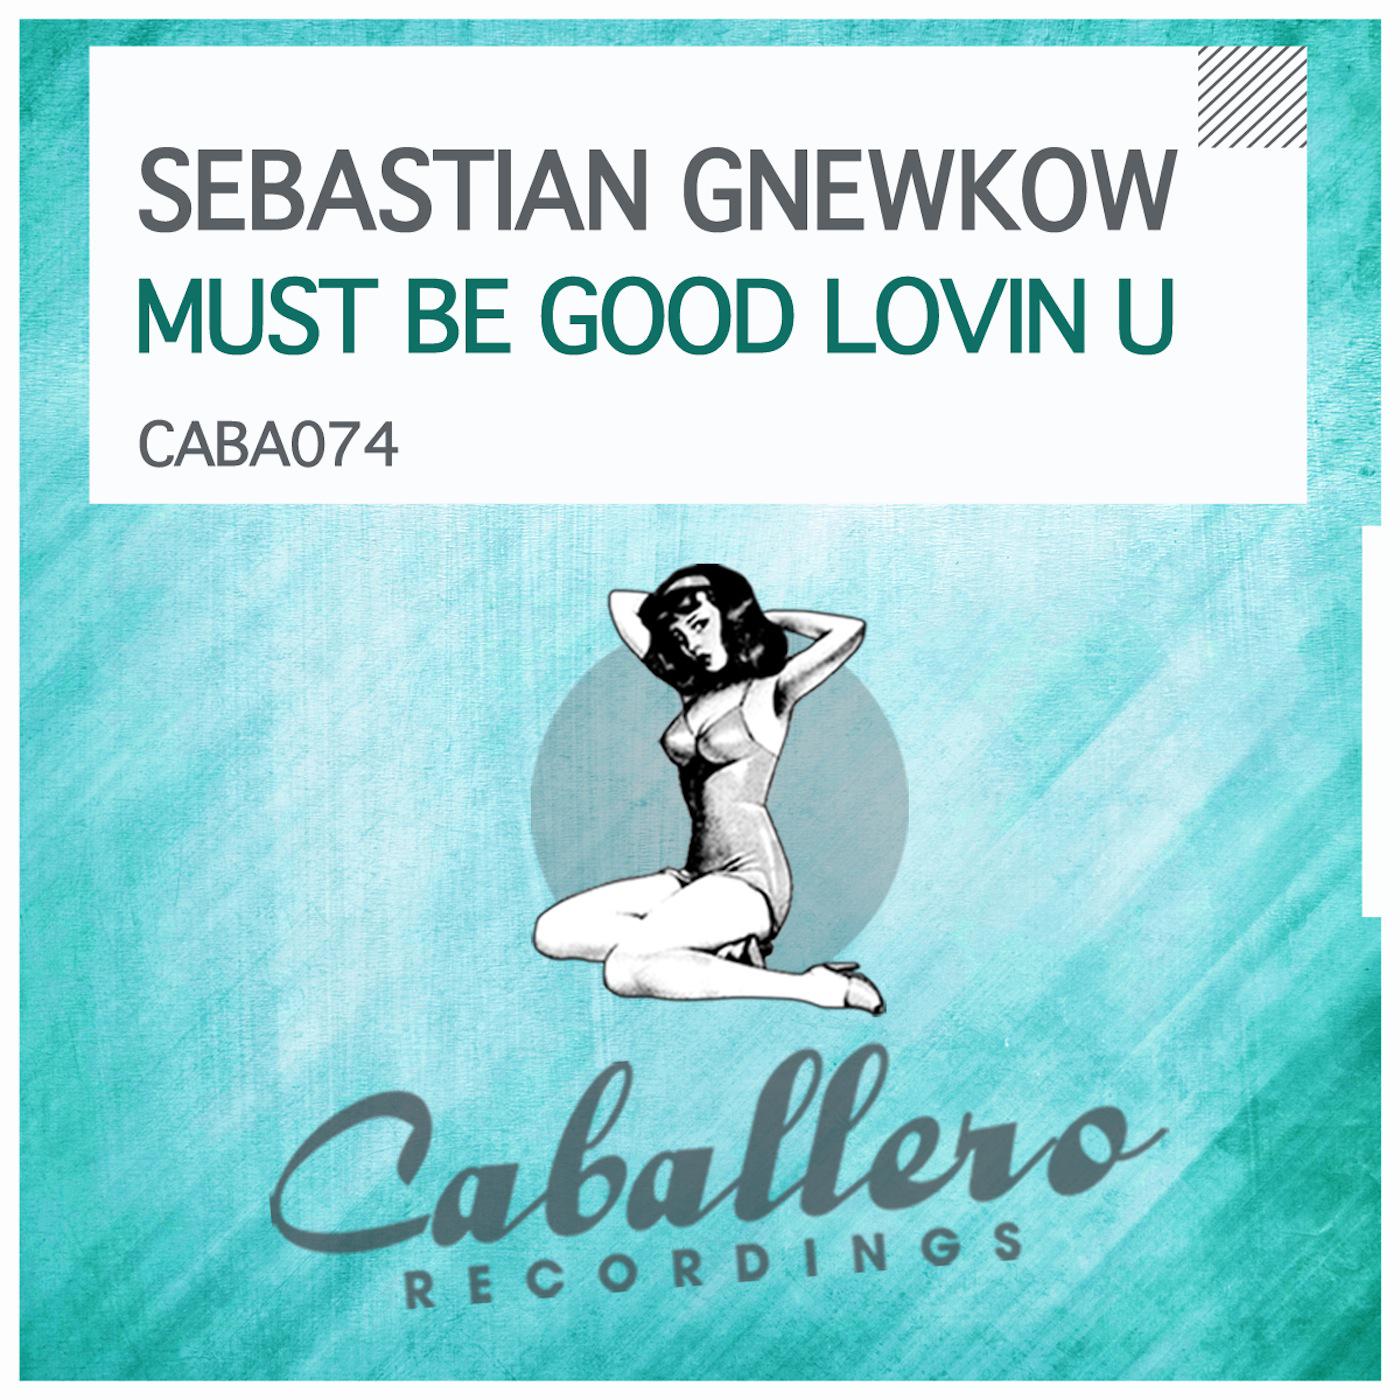 Must Be Good Lovin U,Sebastian Gnewkow,Caballero Recordings,,Single,Must Be...